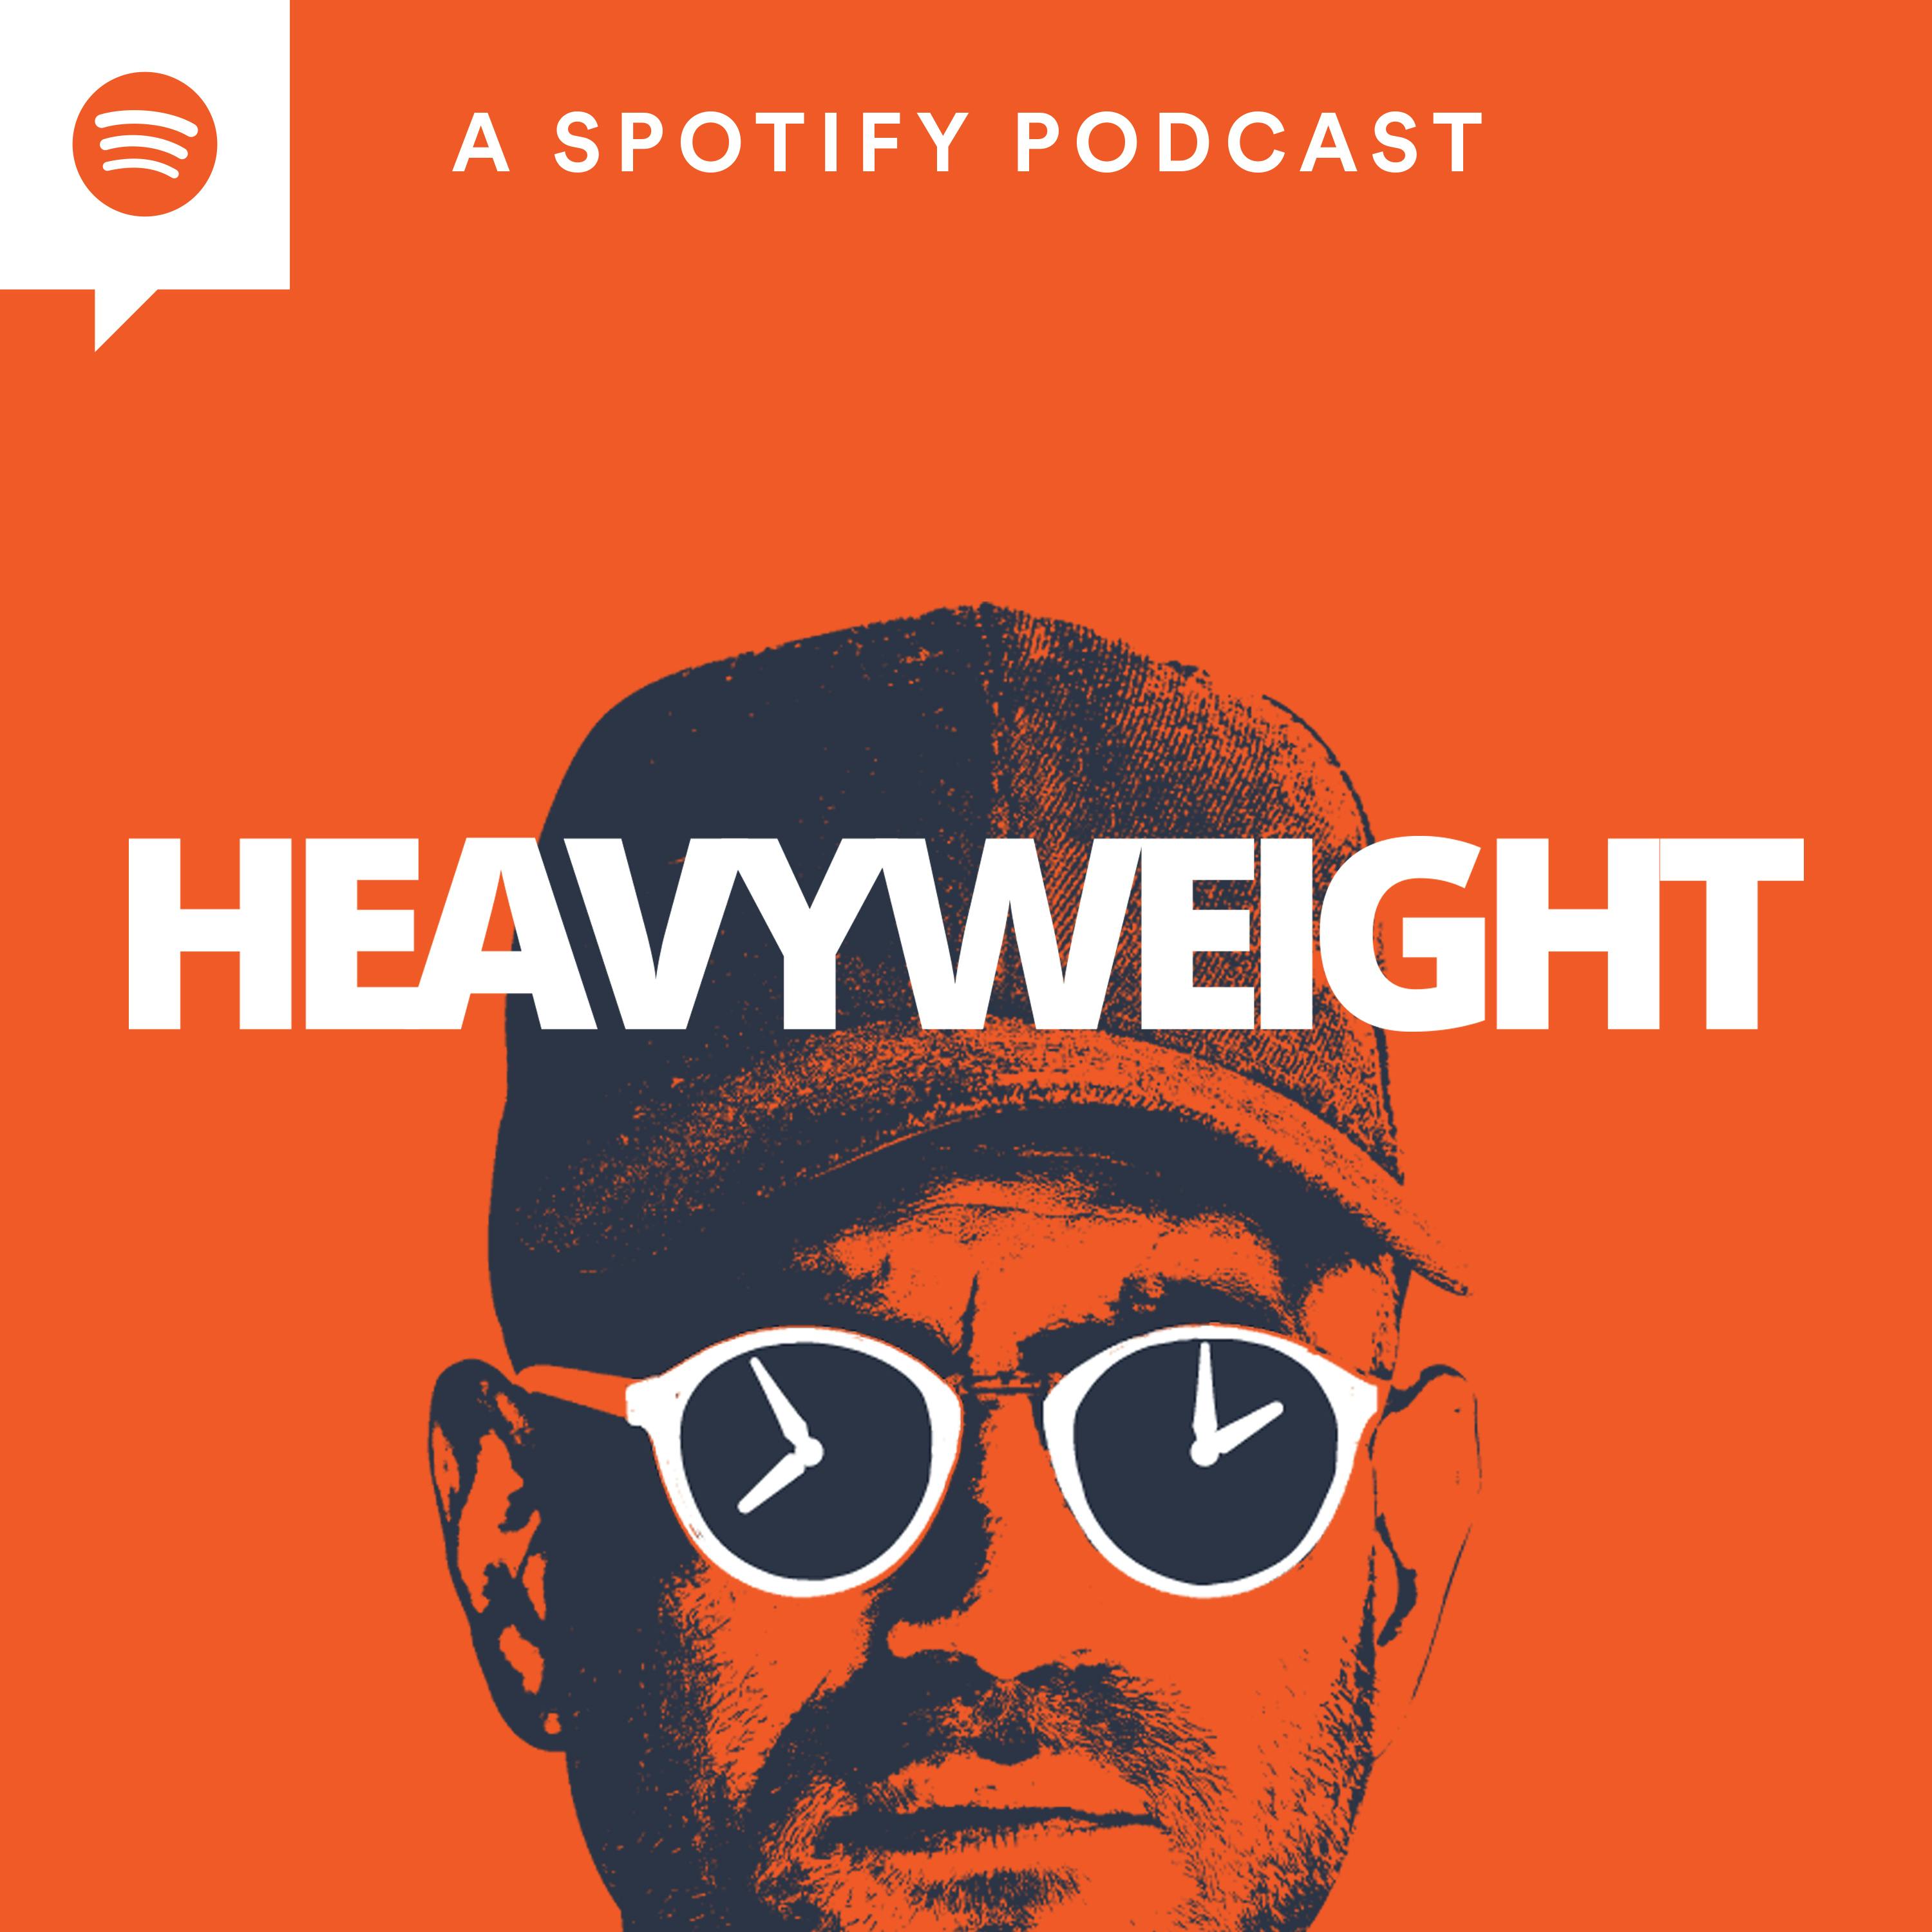 Heavyweight:Spotify Studios